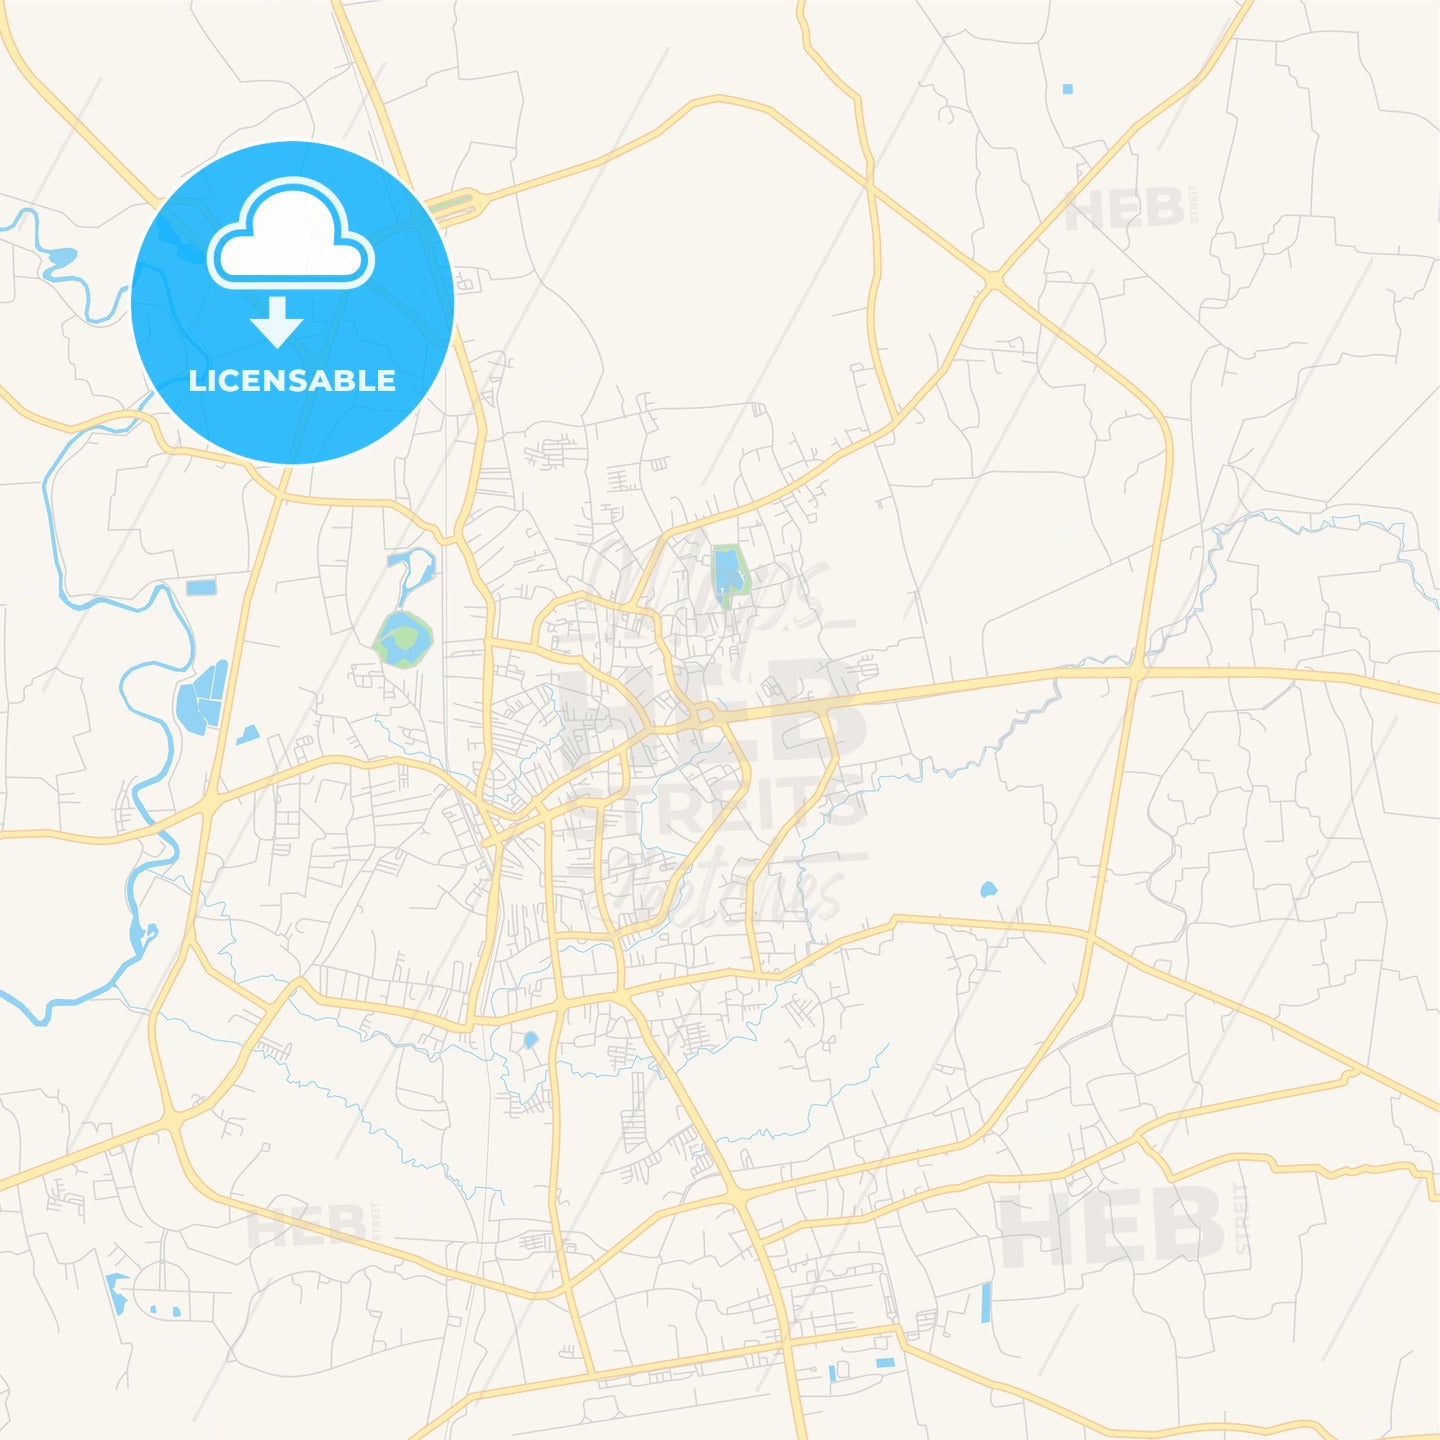 Printable street map of Trang, Thailand